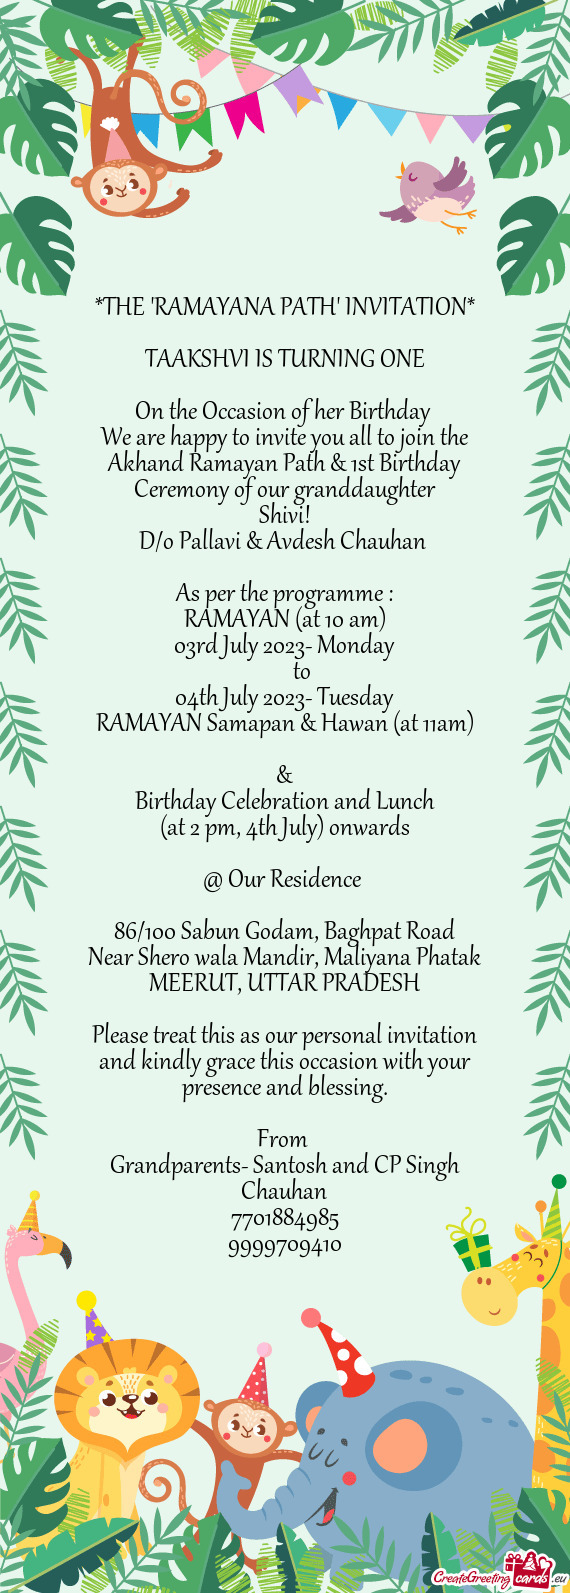 THE "RAMAYANA PATH" INVITATION